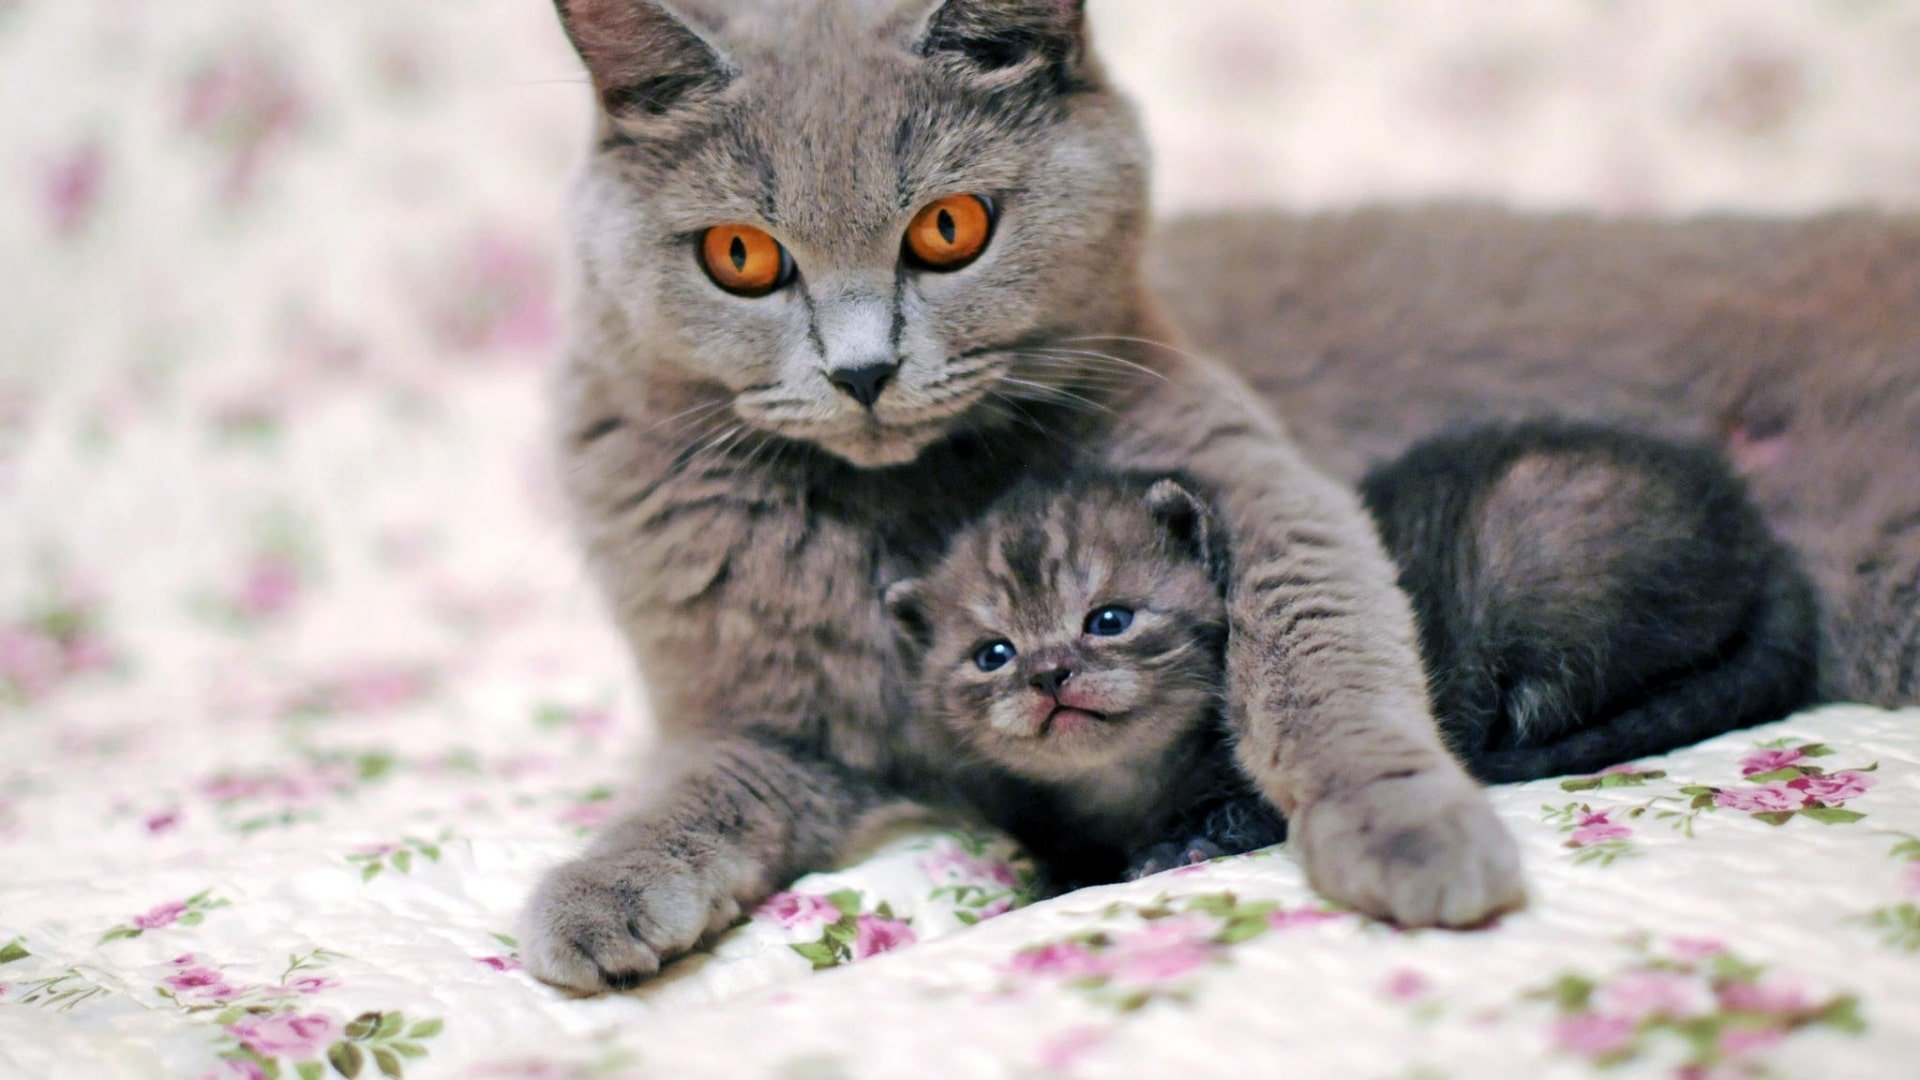 Cat and kitten